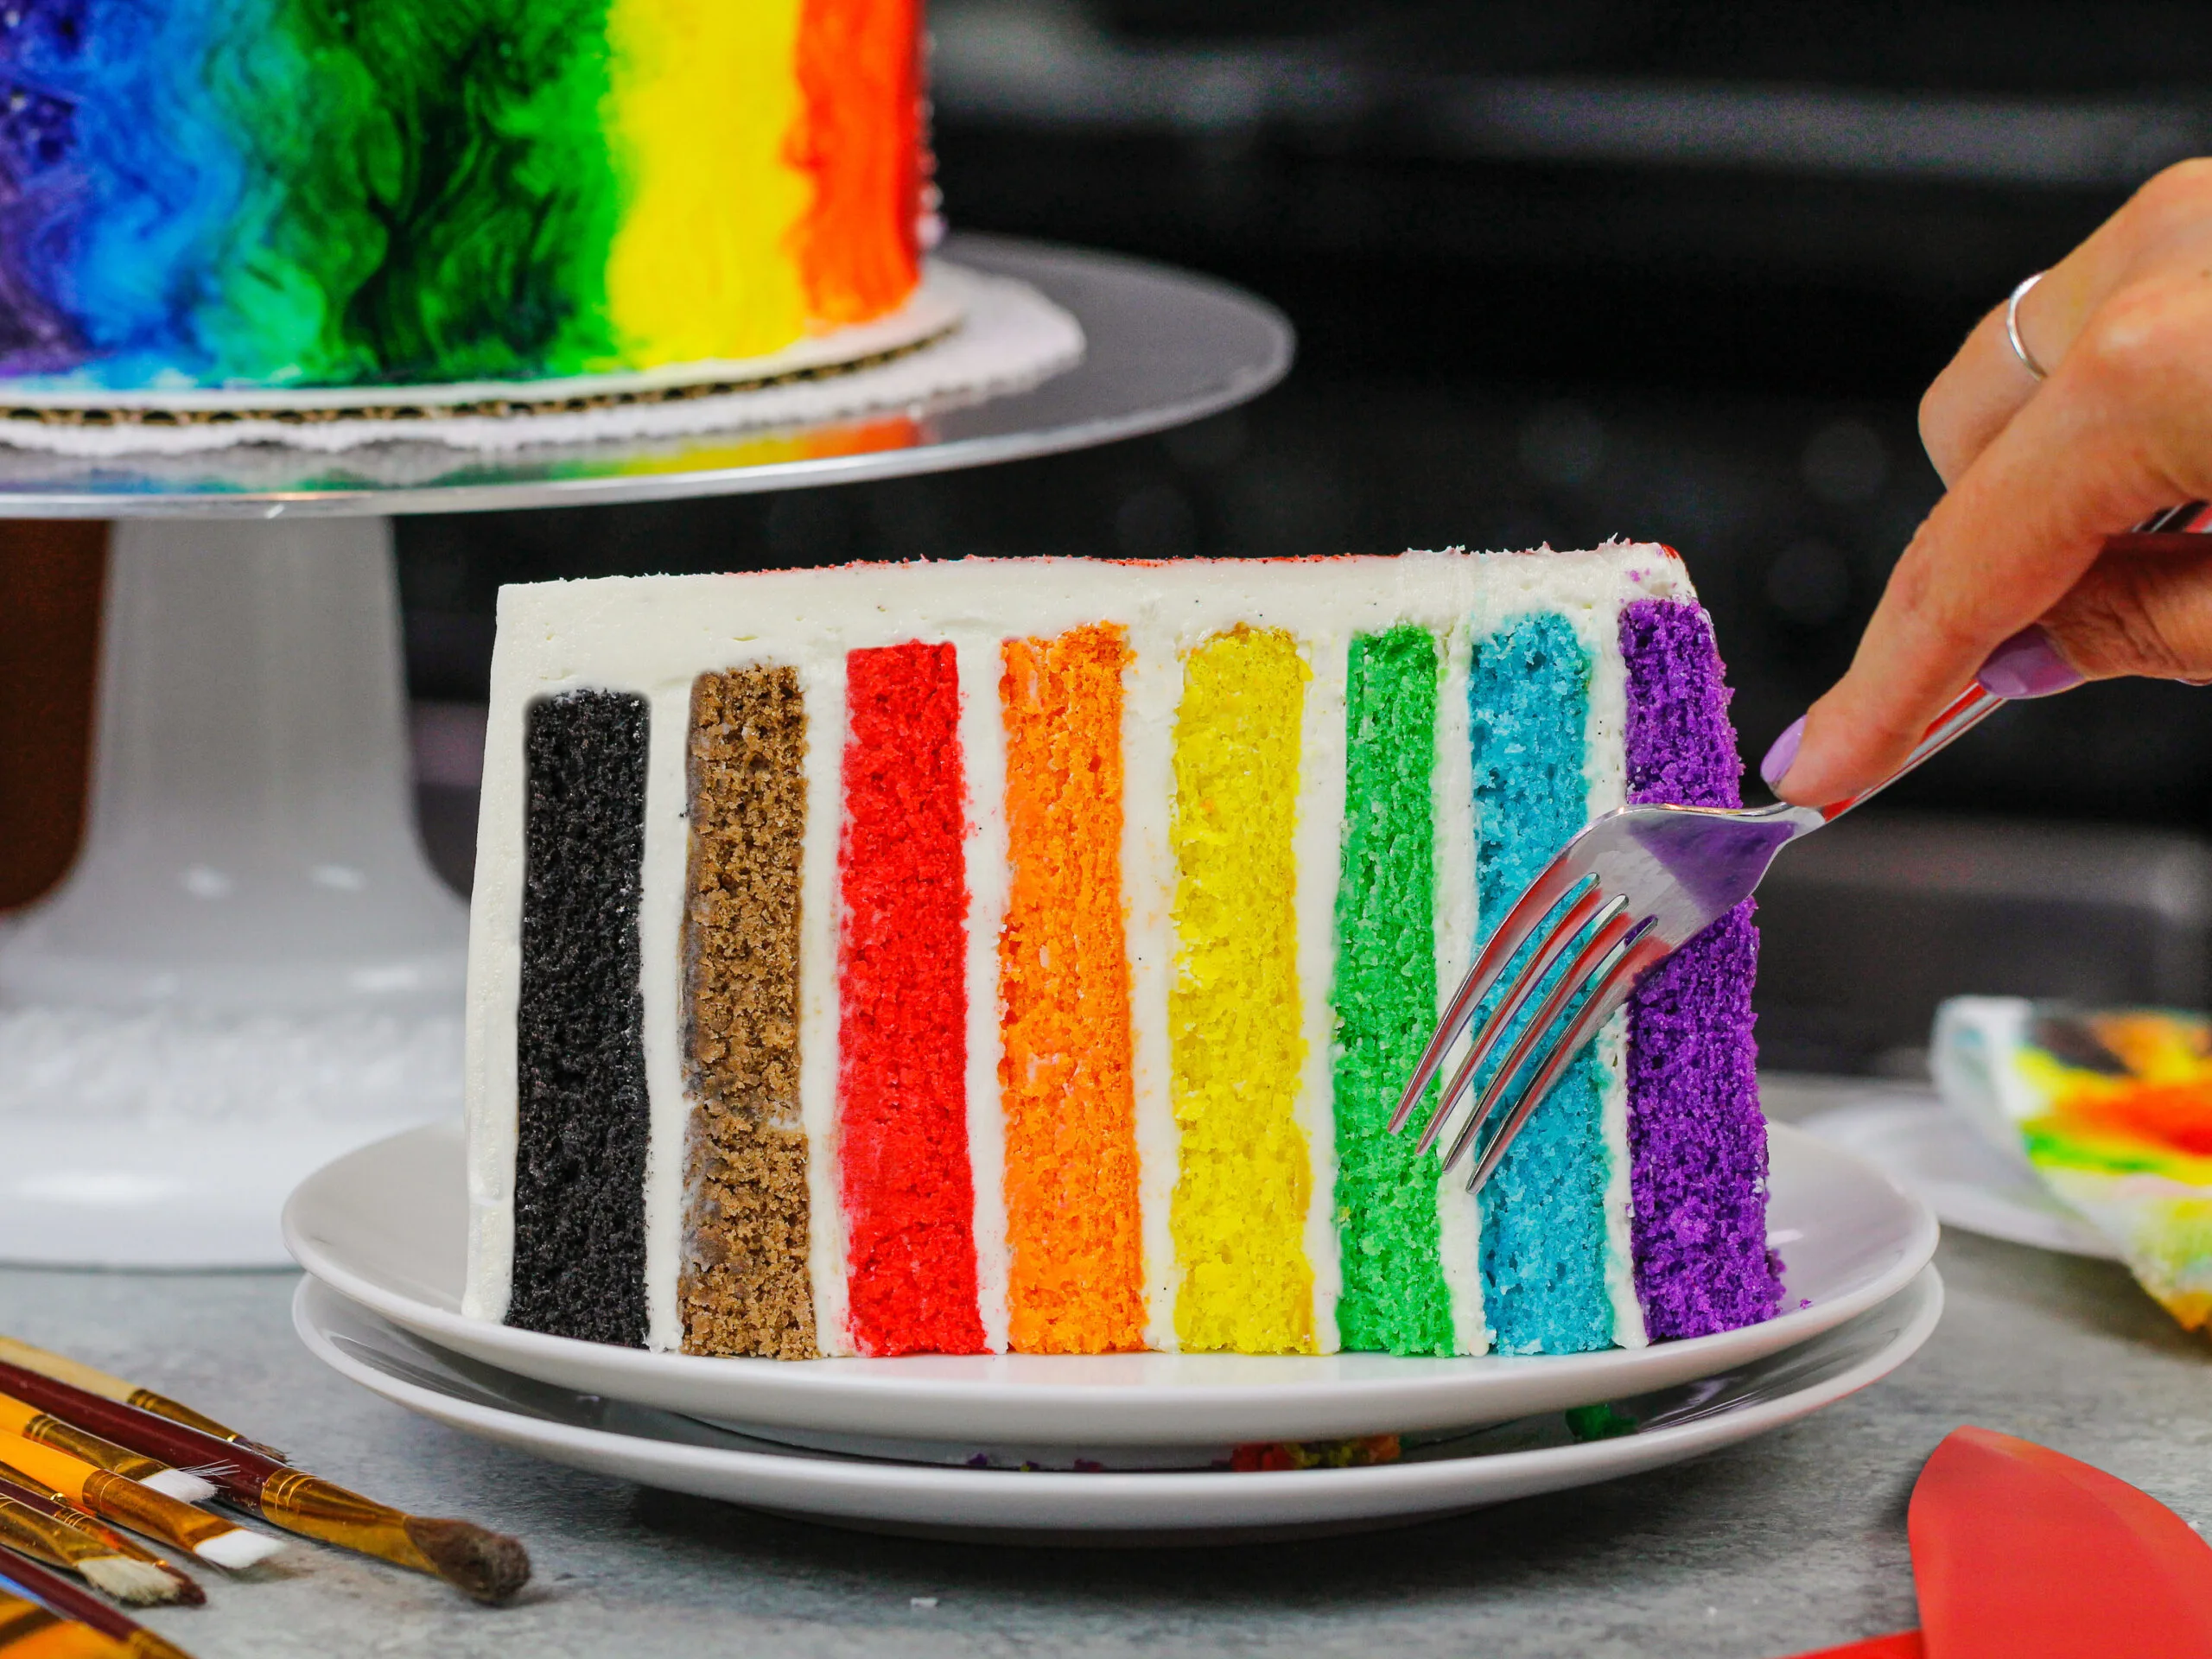 10 rainbow wedding cake ideas to inspire your big day